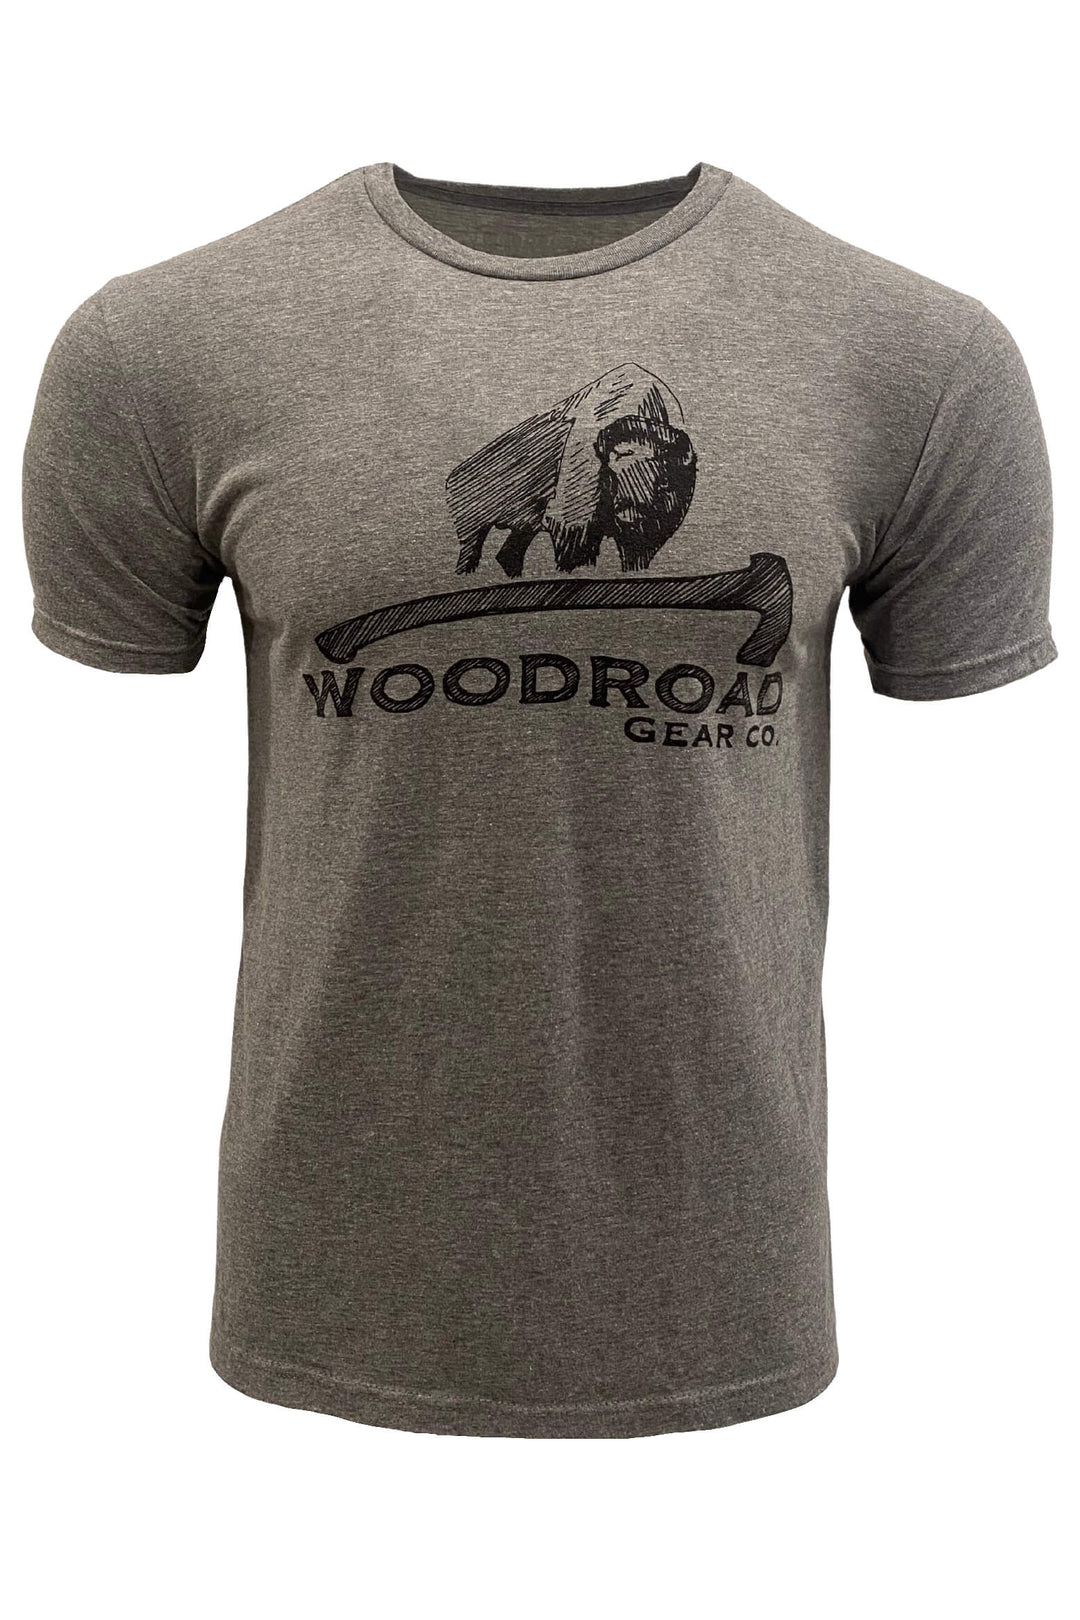 Bison Axe T-Shirt - Gray - Woodroad Gear Co